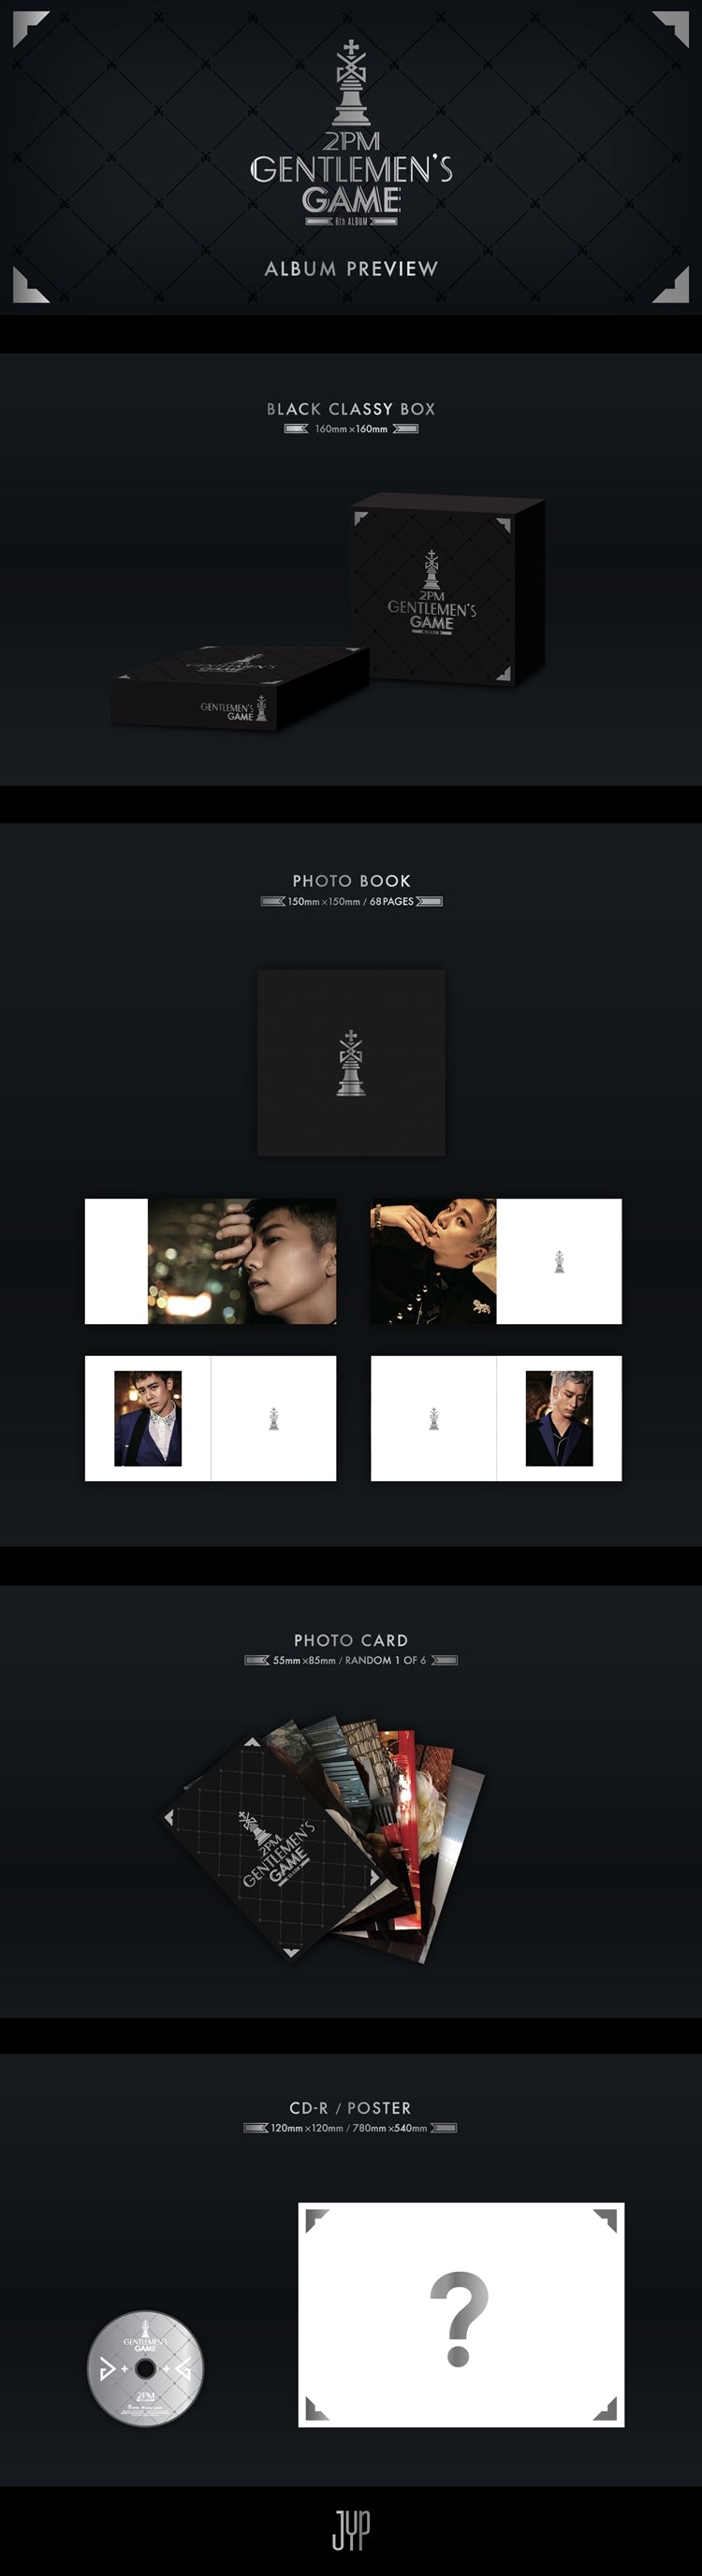 2PM - [GENTLEMEN'S GAME] 6th Album